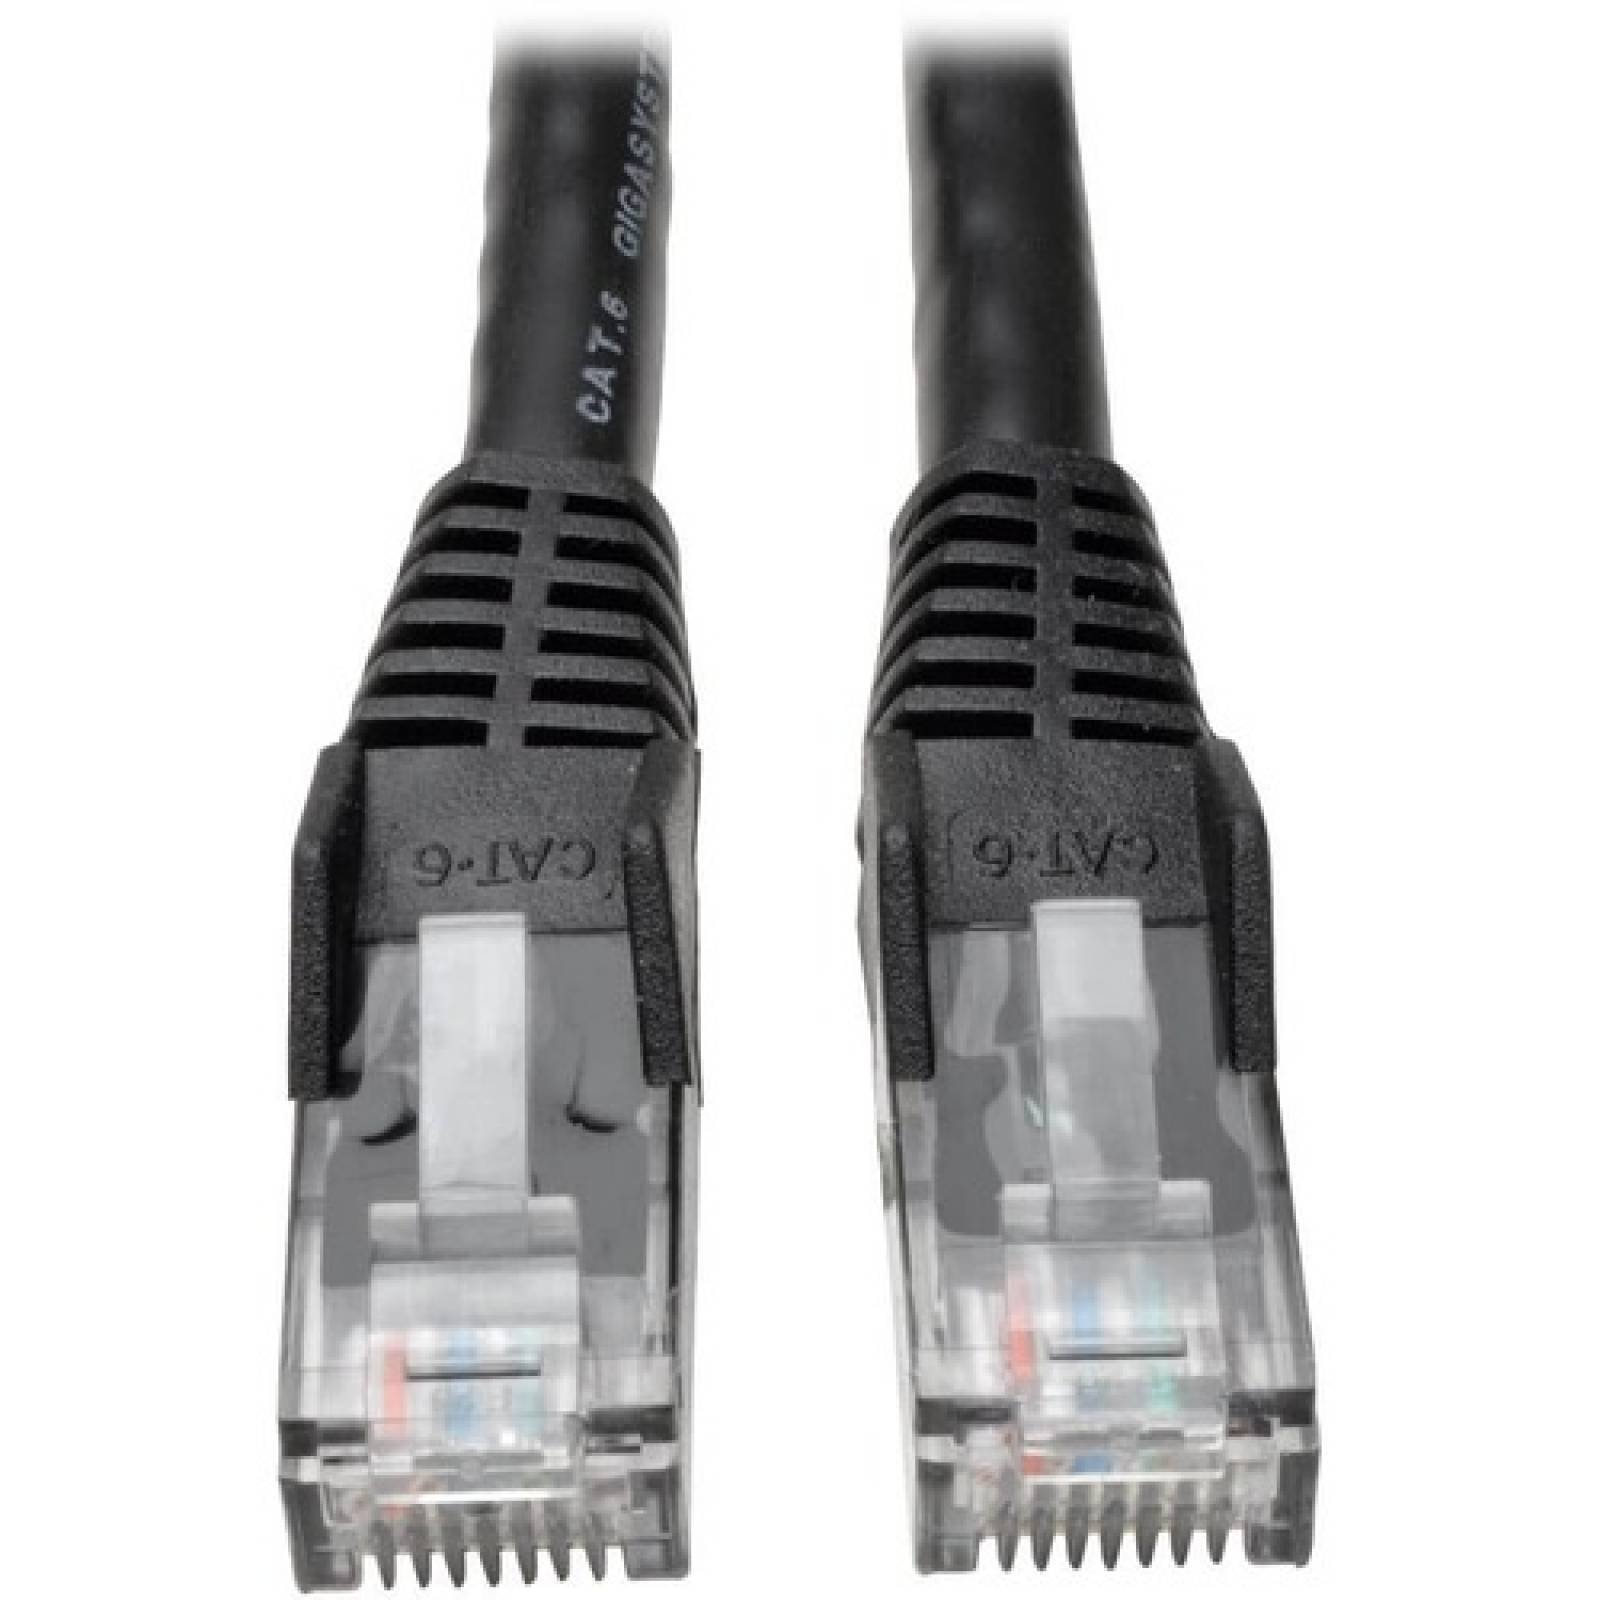 Cable Ethernet de 10 metros CAT 6 Real Gigabit Garantizado